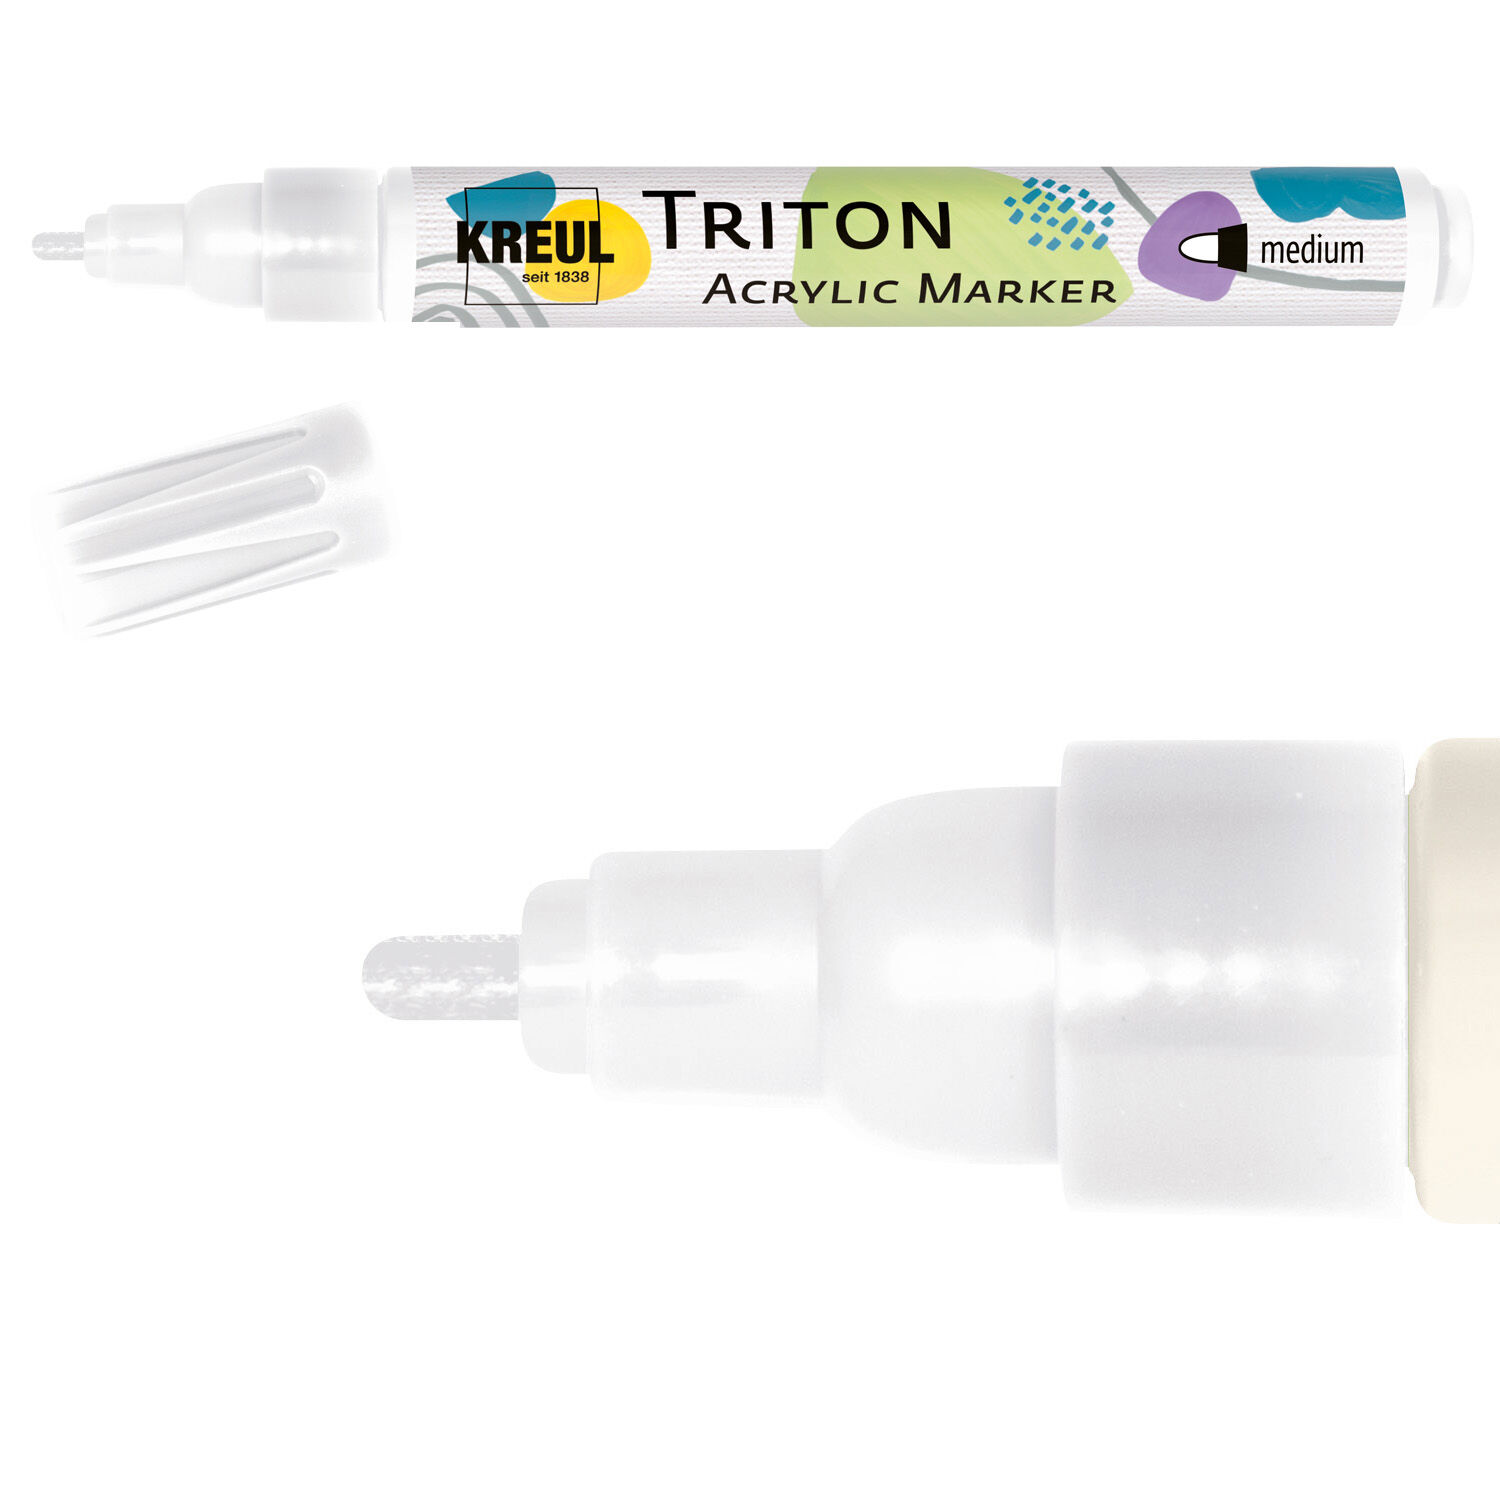 NEU Kreul Triton Acrylic Marker / Acrylstift, Medium 1-3 mm, Weiß